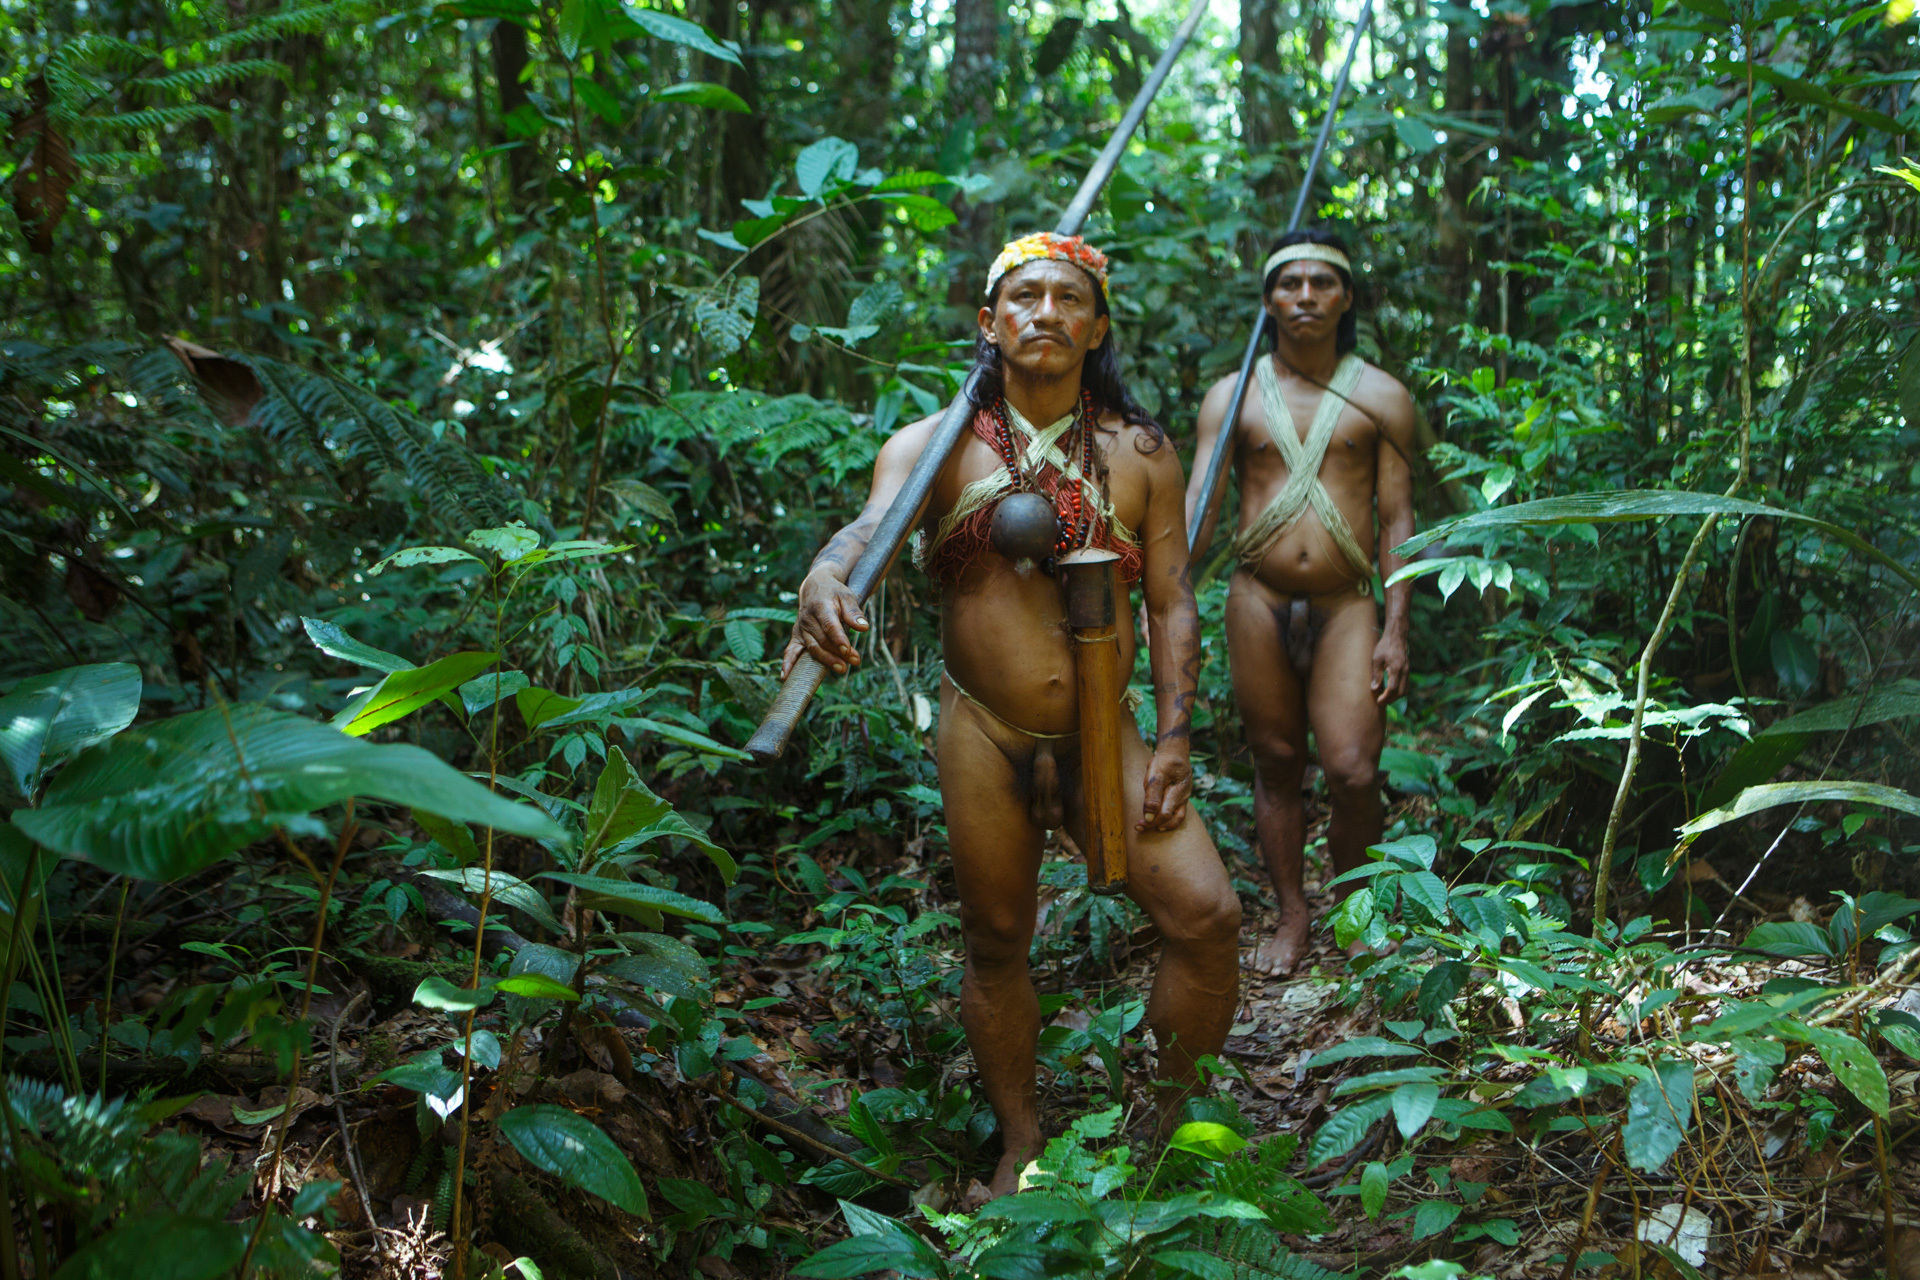 Amazon Tribe Порно Видео... 👉 🏻 👉 🏻 👉 🏻 ВСЯ ИНФОРМАЦИЯ ДОСТУПНА ЗДЕСЬ...